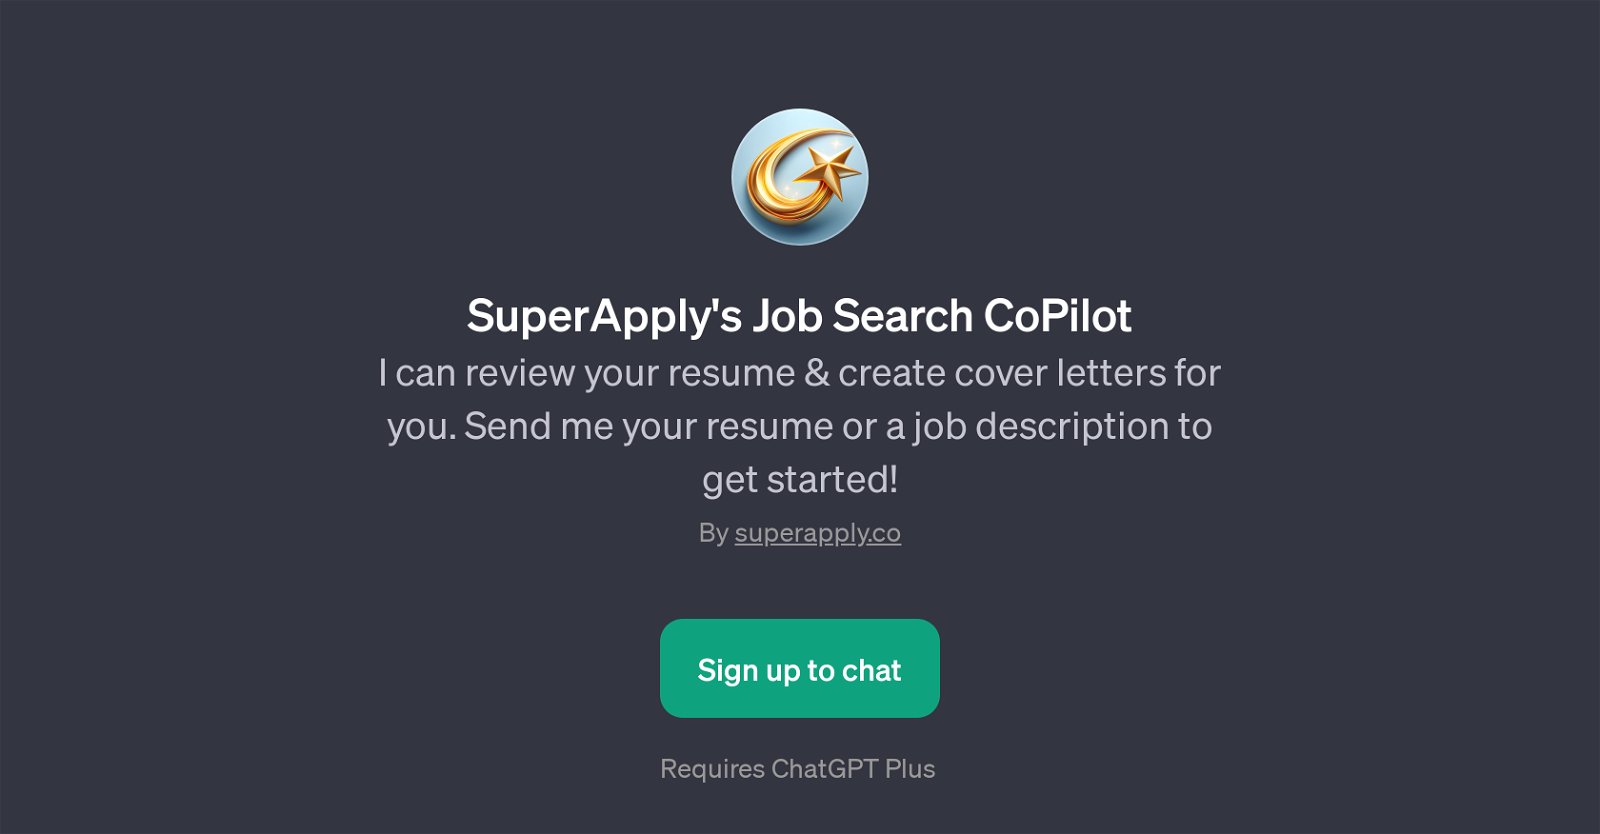 SuperApply's Job Search CoPilot website